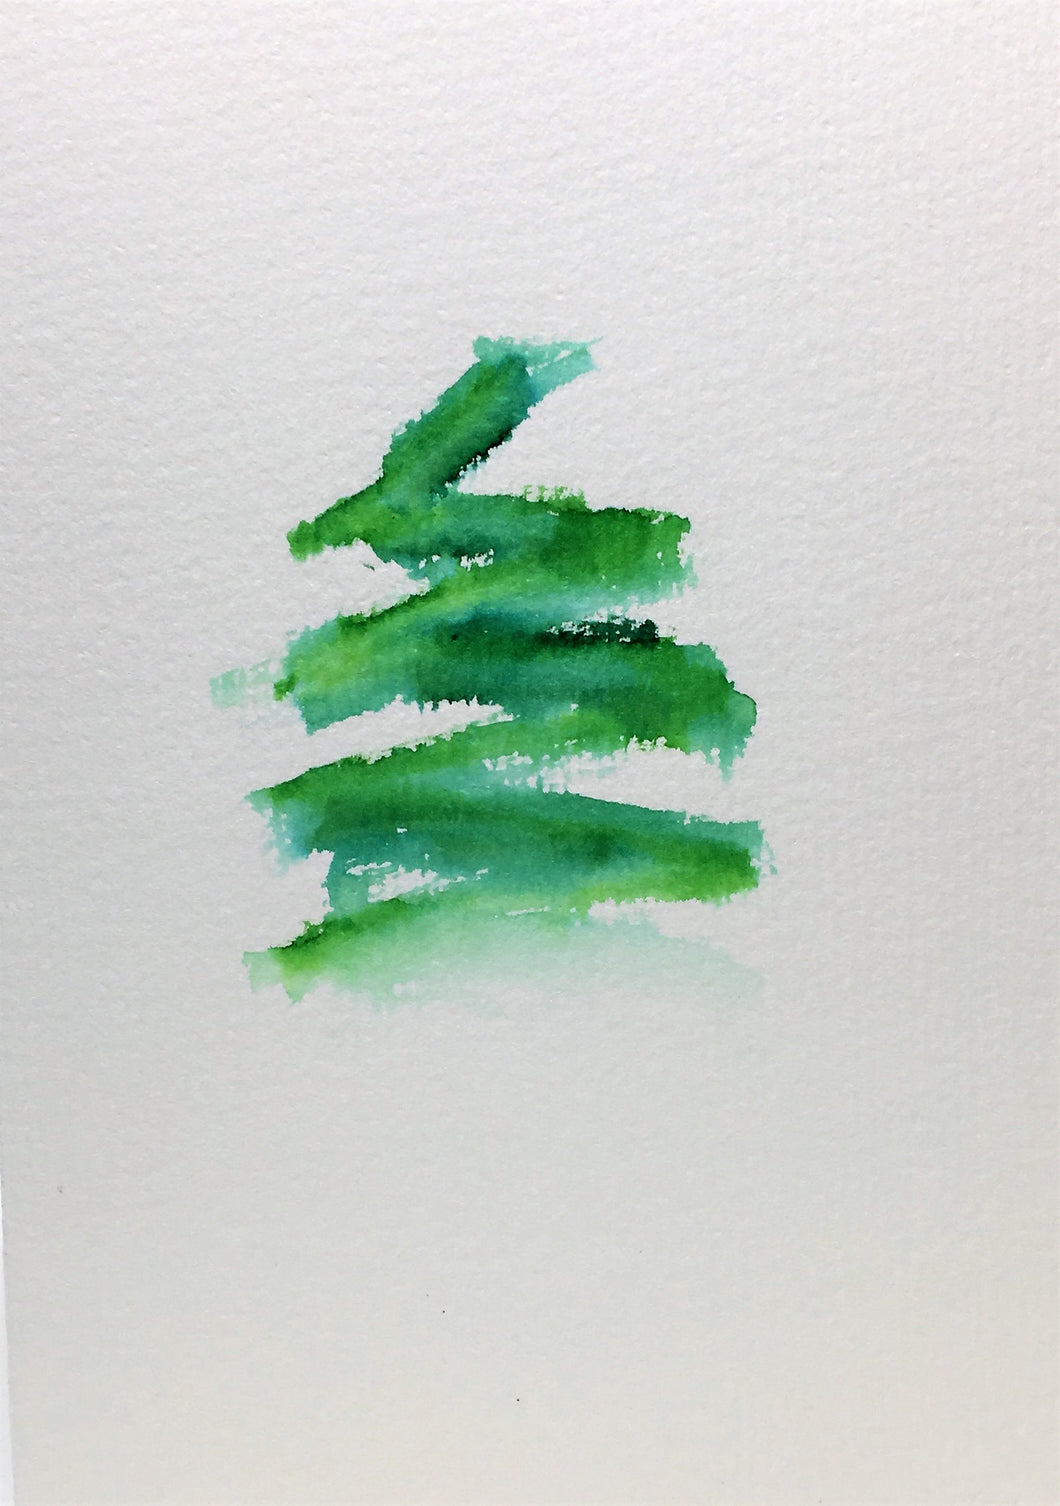 Original Hand Painted Christmas Card - Abstract Green Christmas Tree 3 - eDgE dEsiGn London